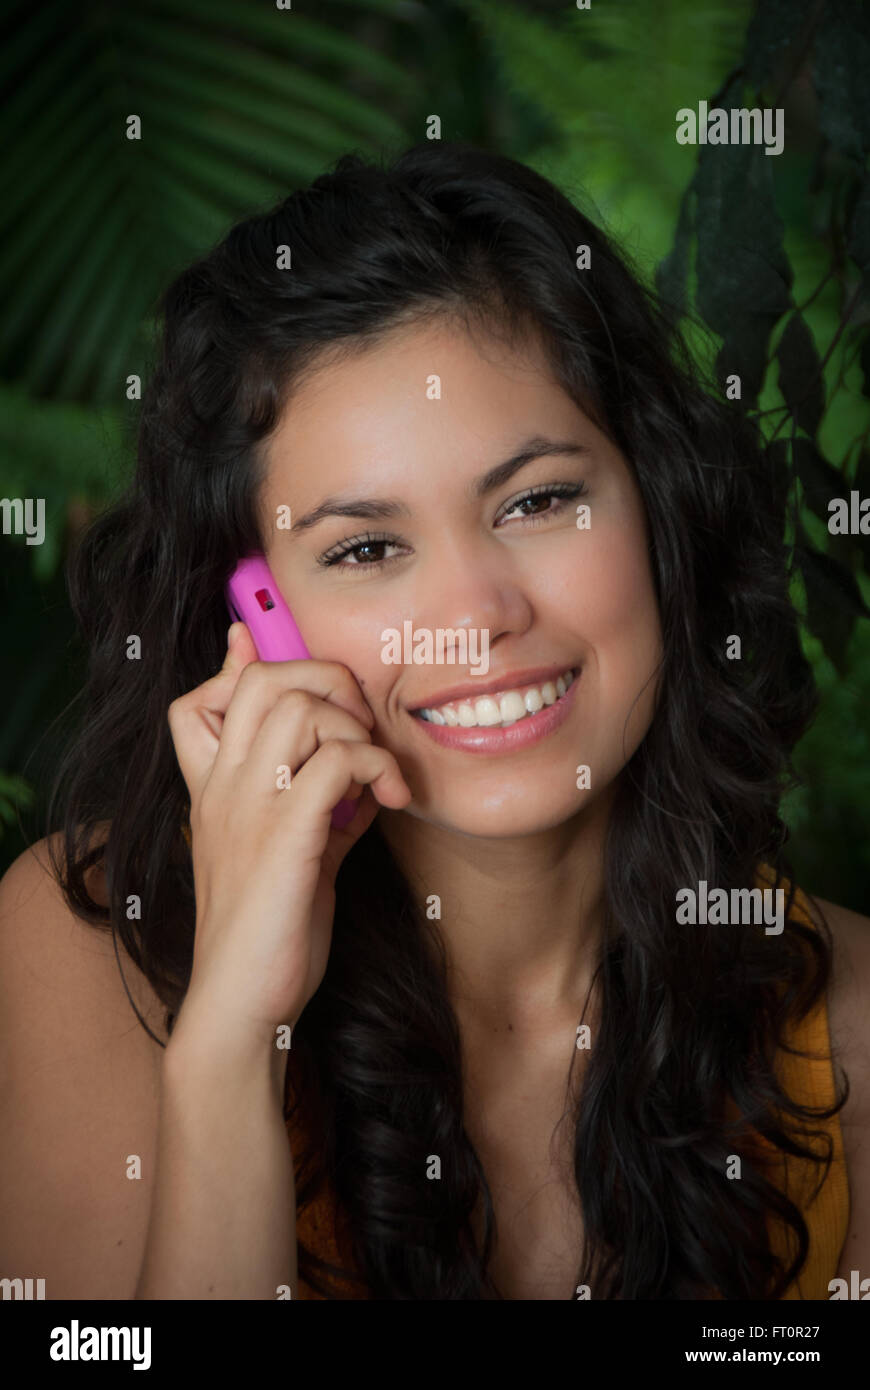 Sonriente joven mujer hispana con teléfono celular - Puerto Vallarta, México #613PV Foto de stock